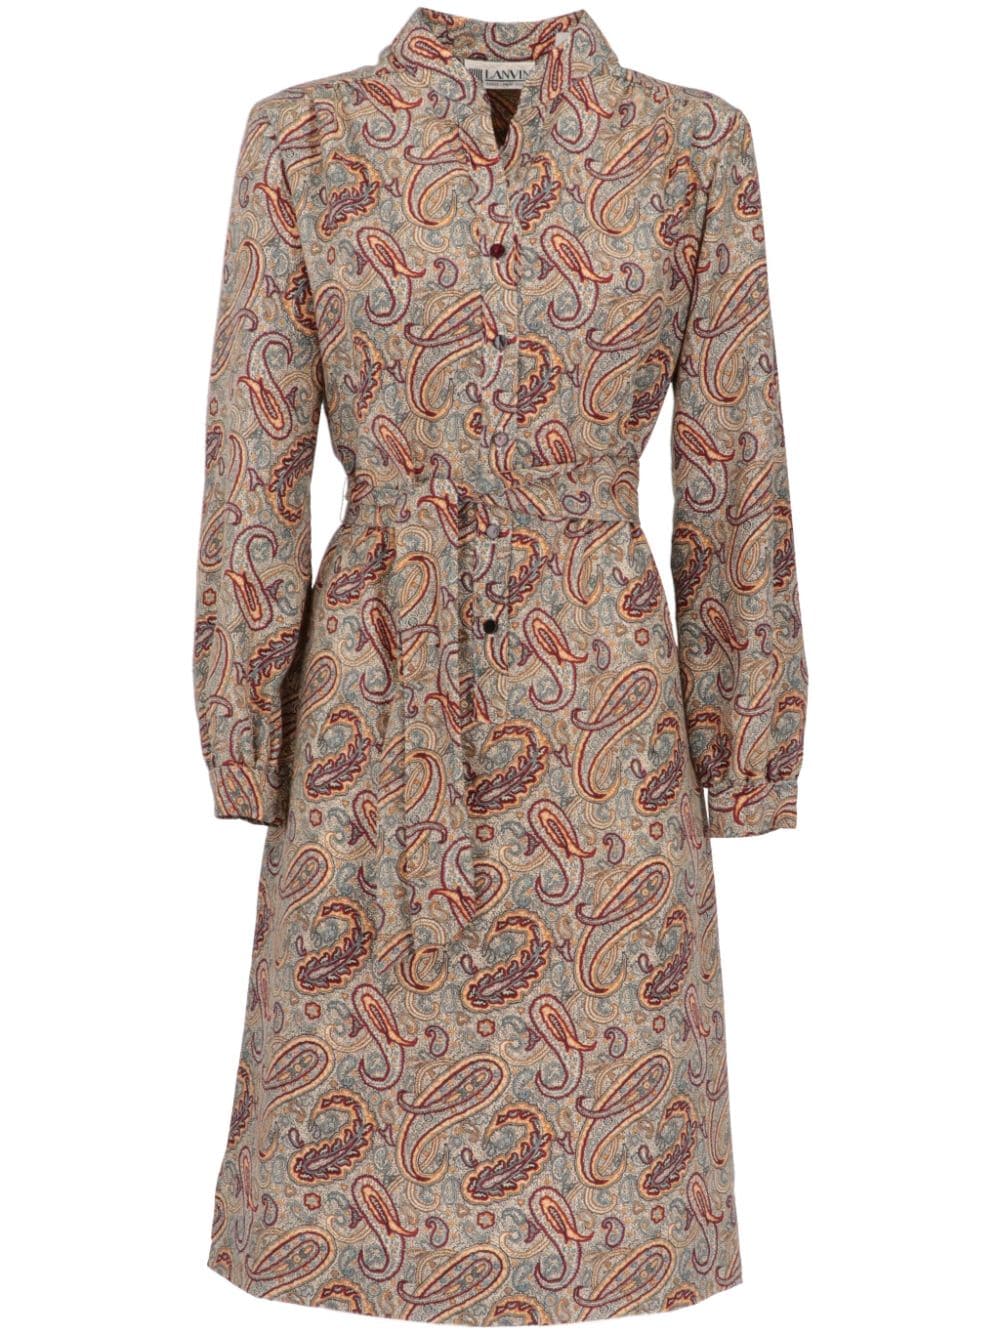 1970s paisley-print cotton dress